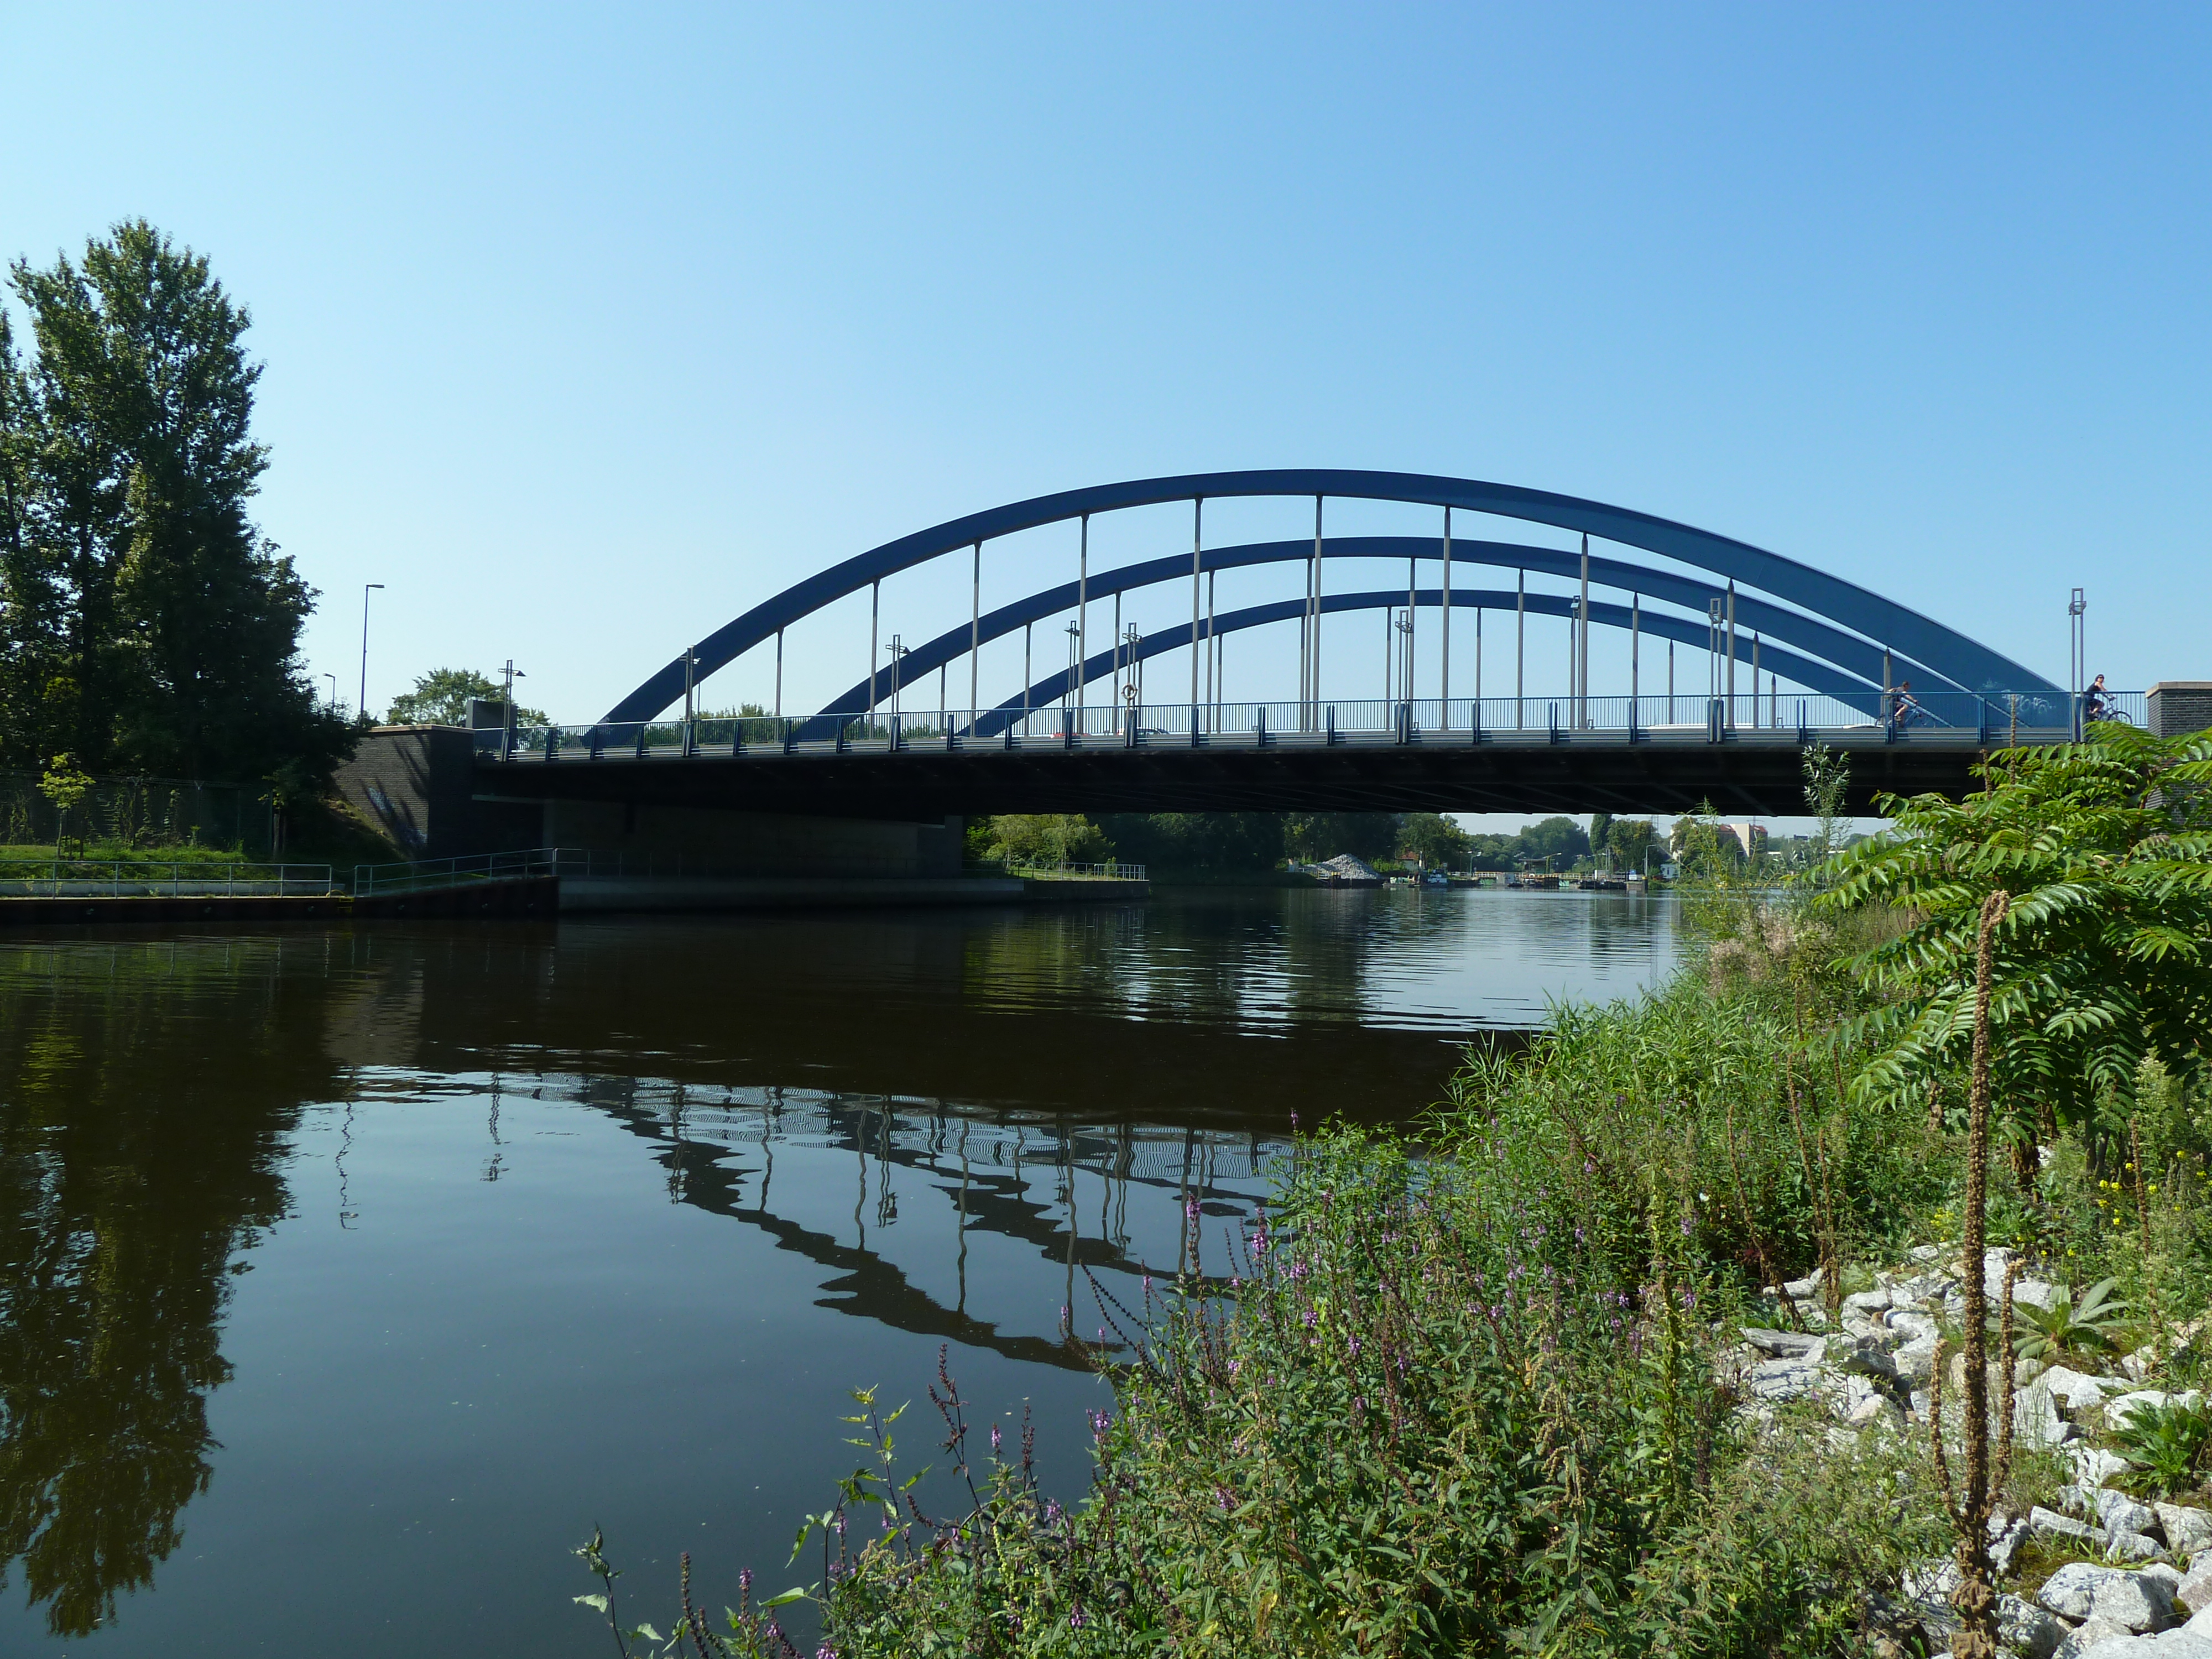 Mörschbrücke über den Westhafenkanal, Berlin